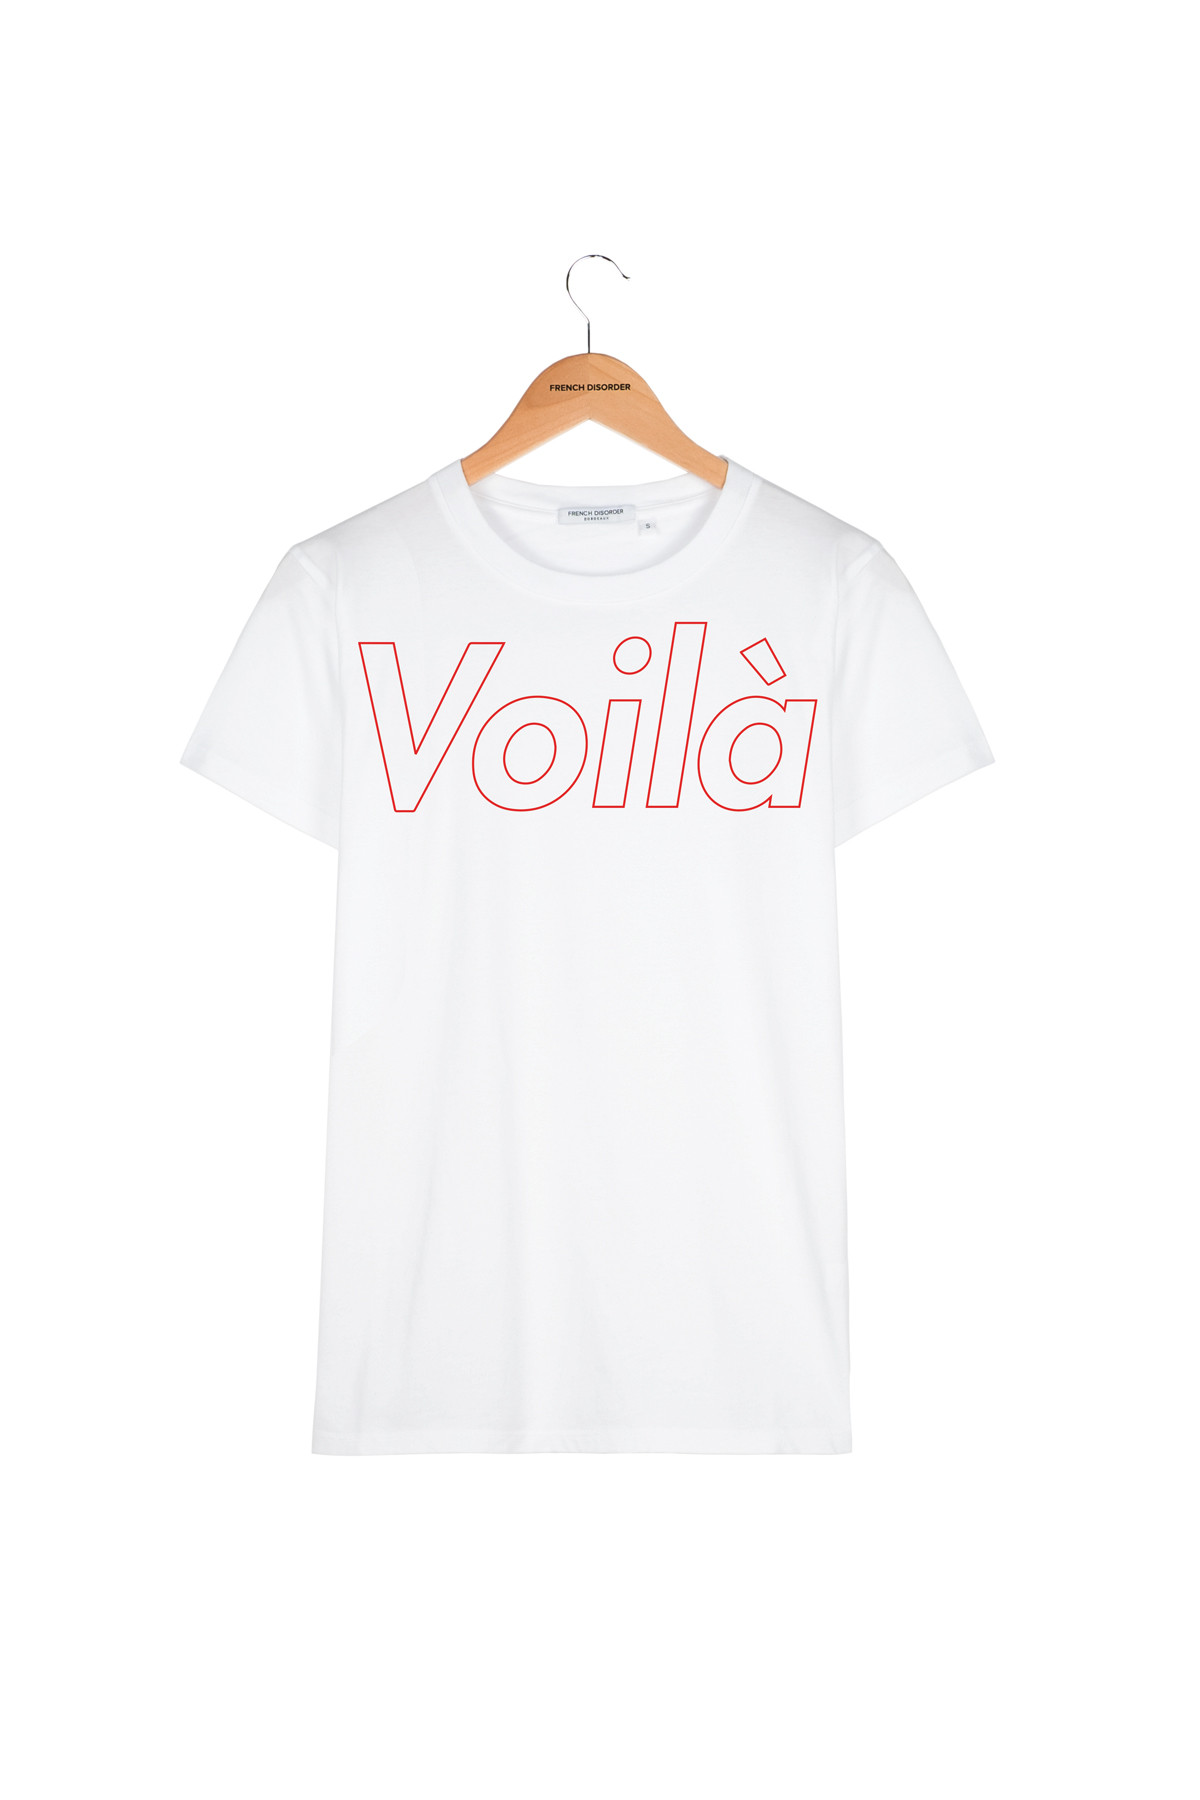 Photo de T-SHIRTS COL ROND T-shirt VOILA chez French Disorder